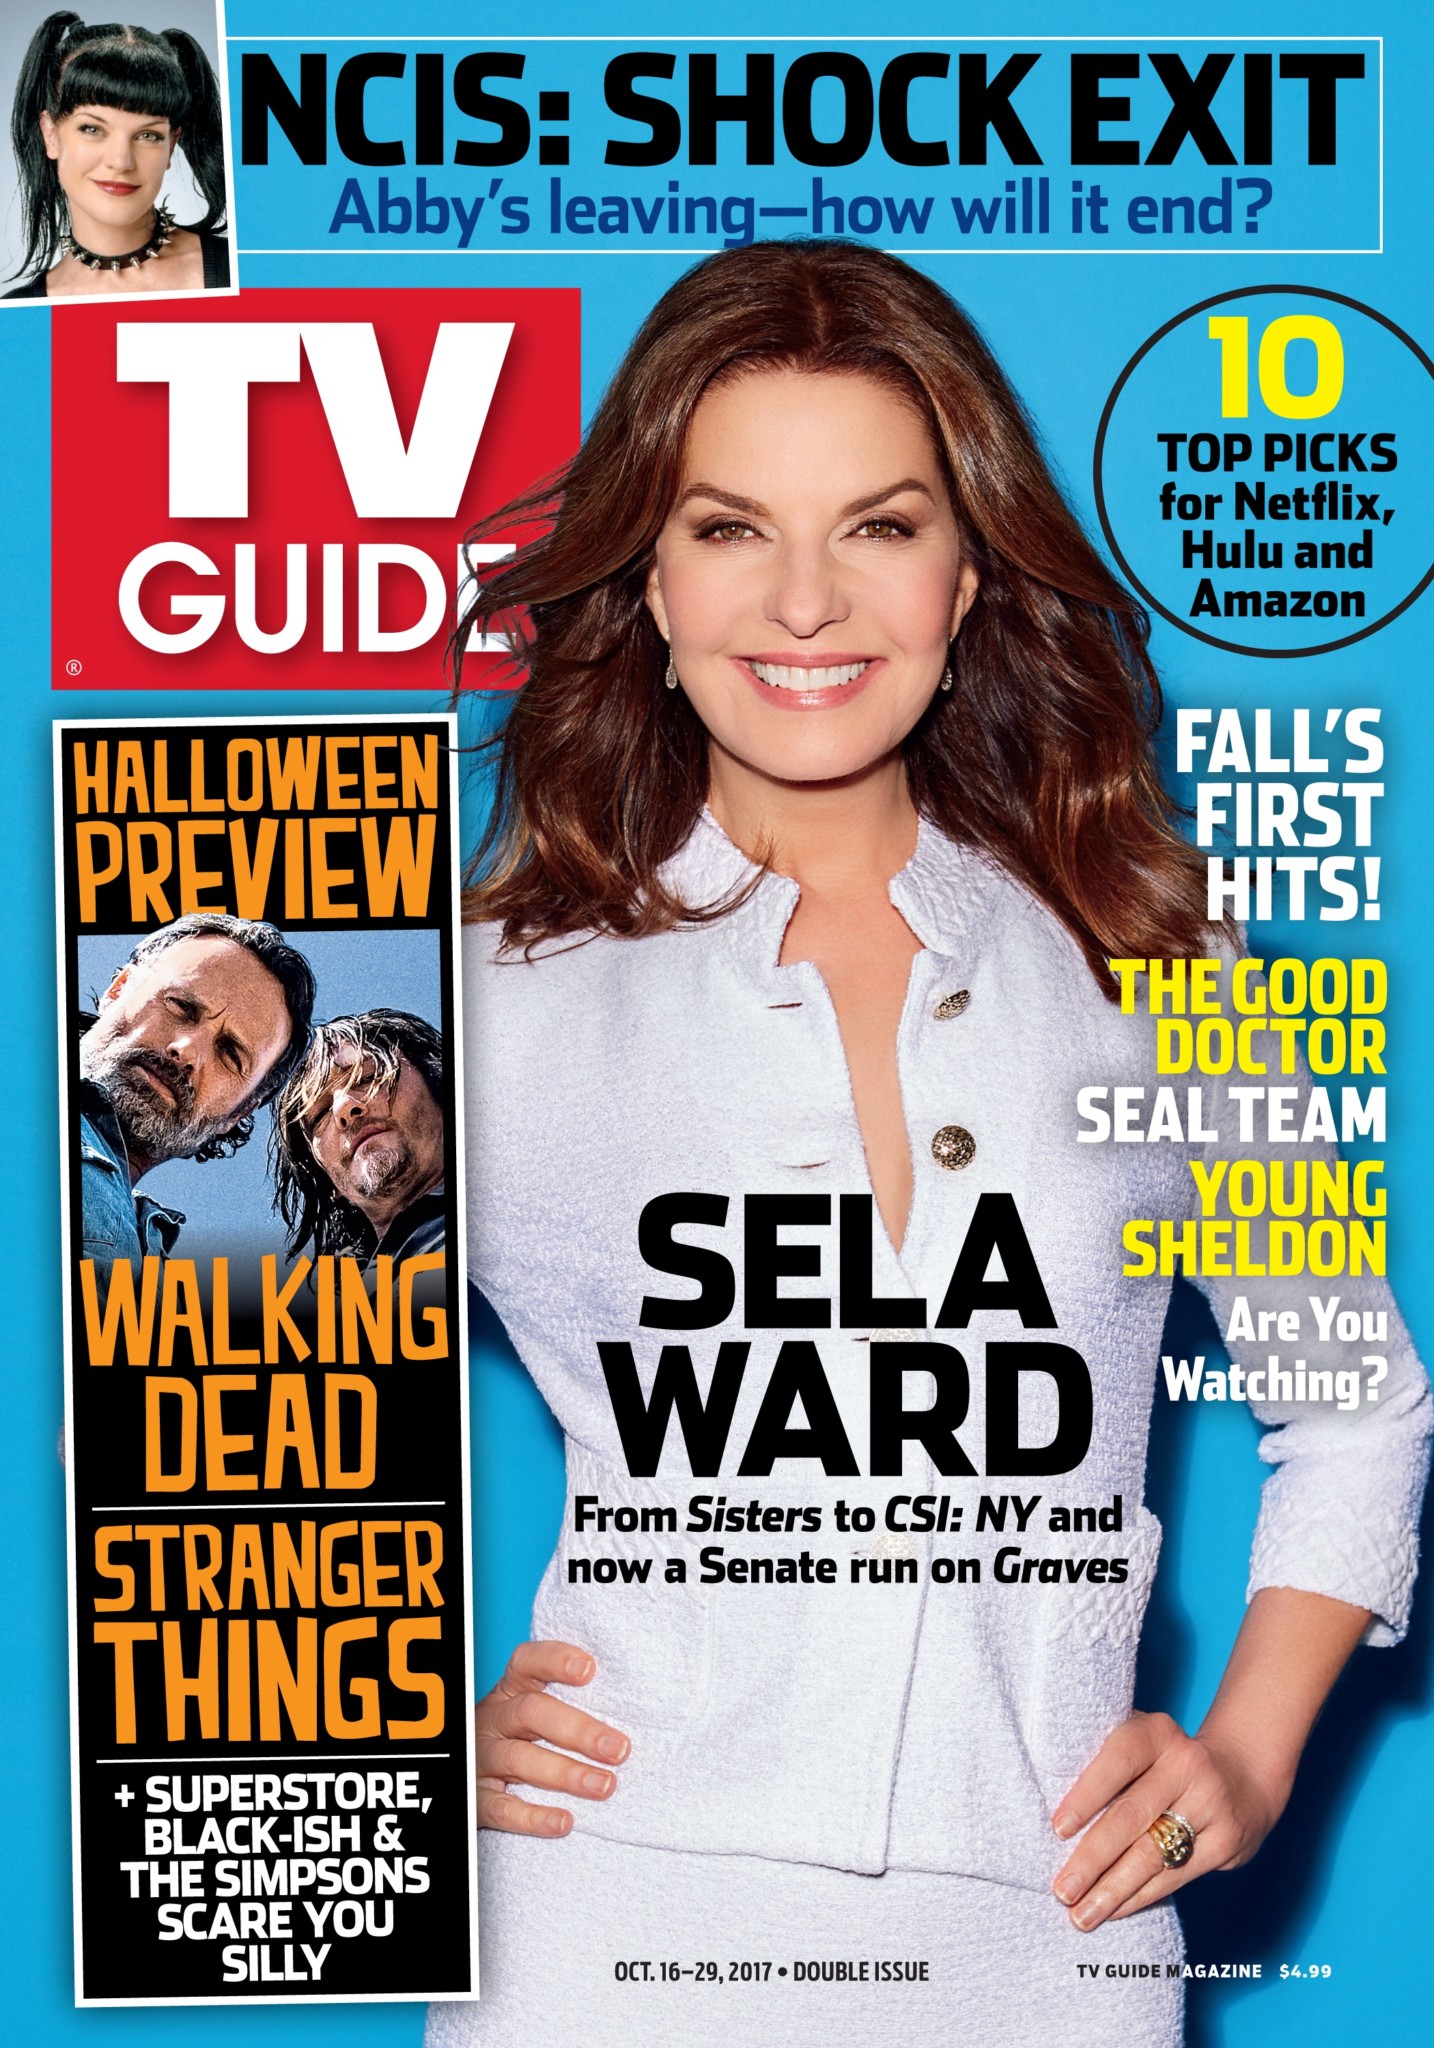 TV Guide. USA TV Guide. TV Guide Magazine. TV Guide Weekly. Tv magazine